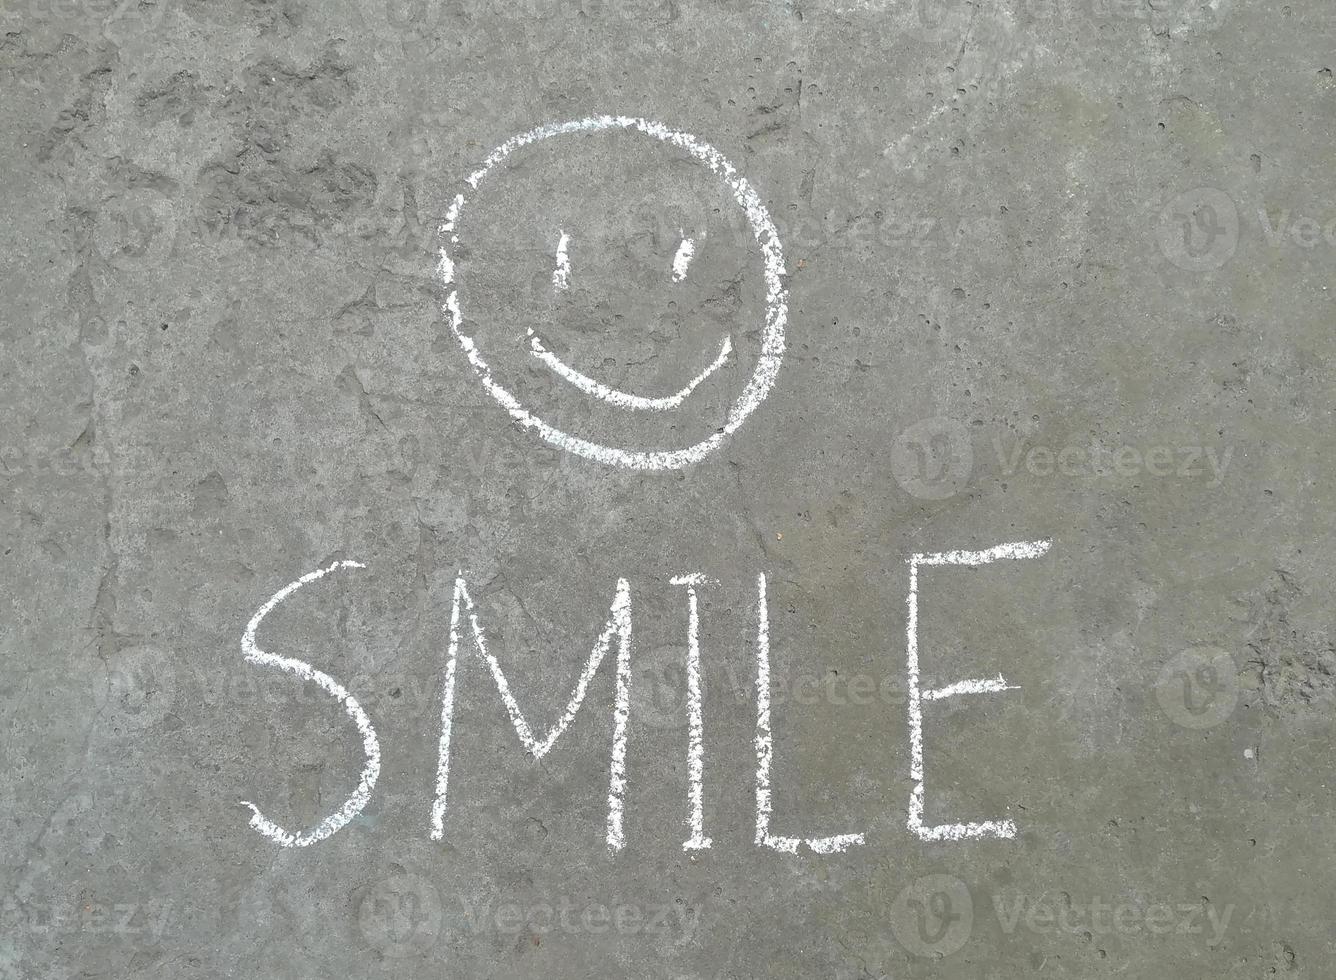 smile is drawn in chalk on the asphalt. children creativity, summer, joy emotion, happiness photo